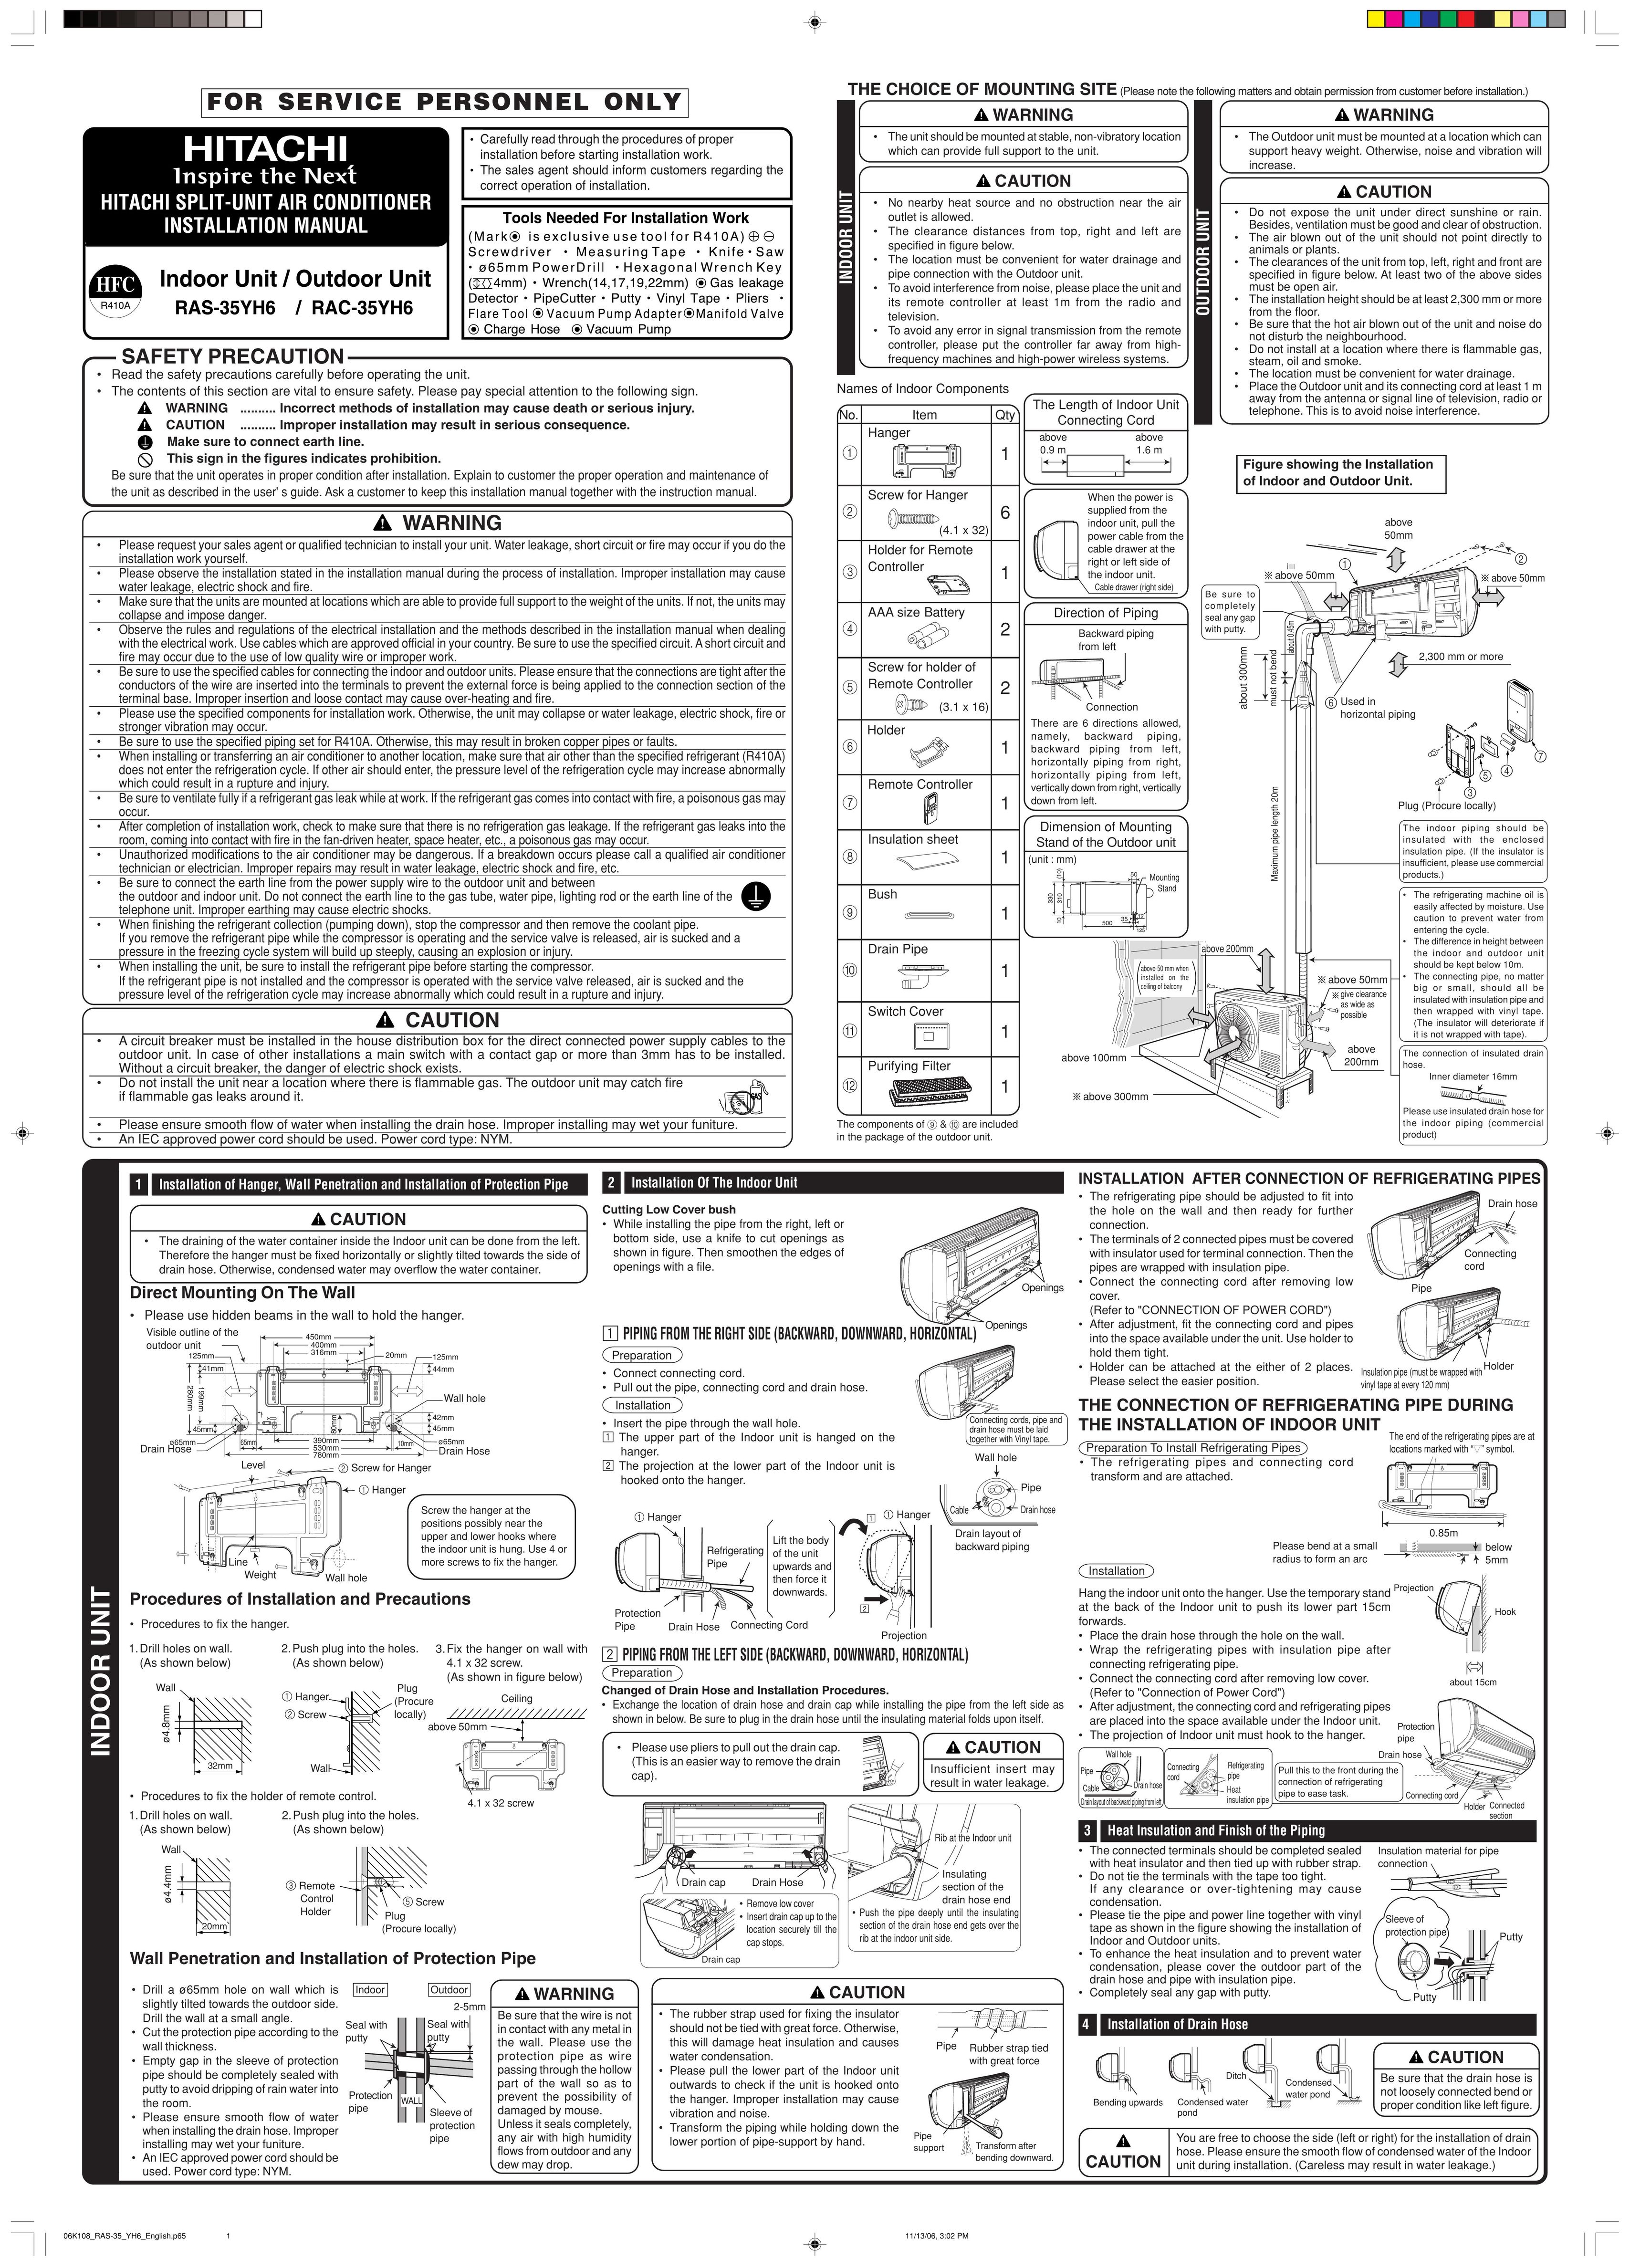 Hitachi RAC-35YH6 Air Conditioner User Manual